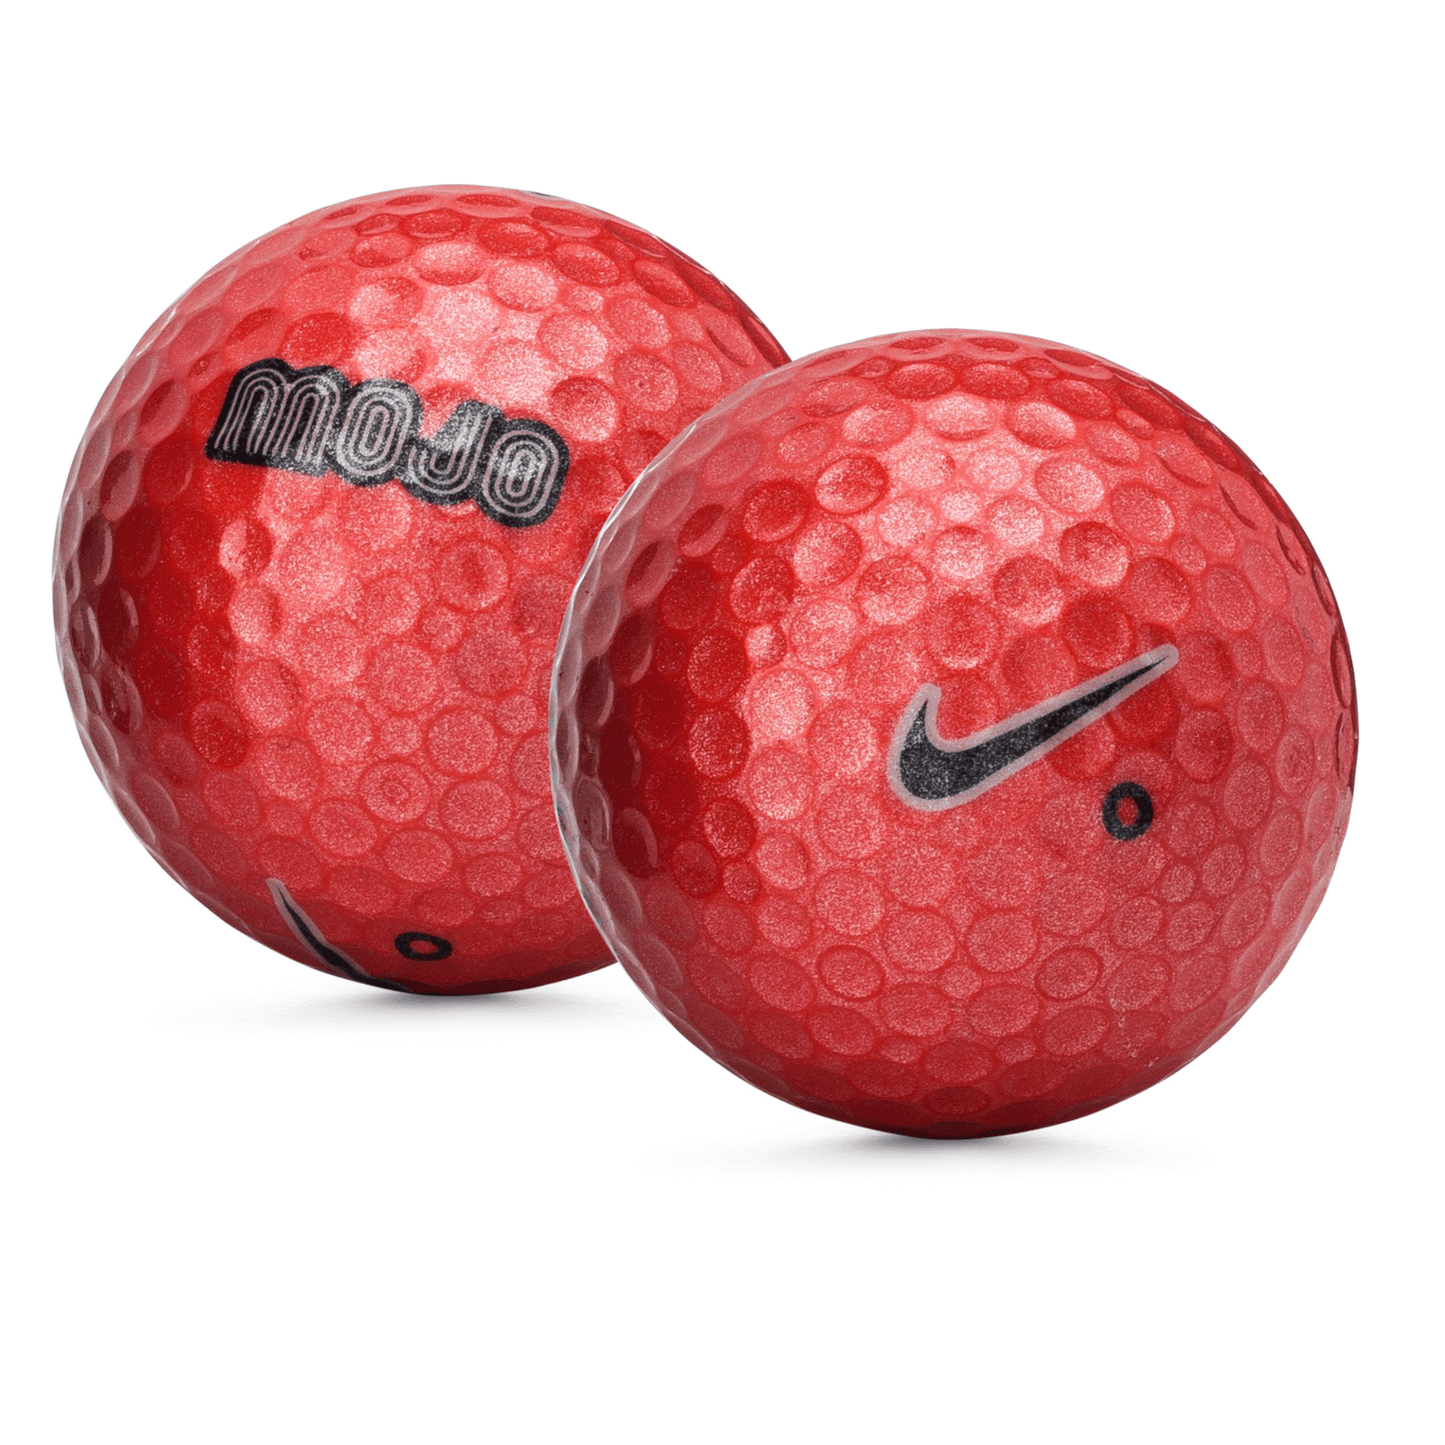 Used Nike Karma Mojo Red Golf Balls - 1 Dozen